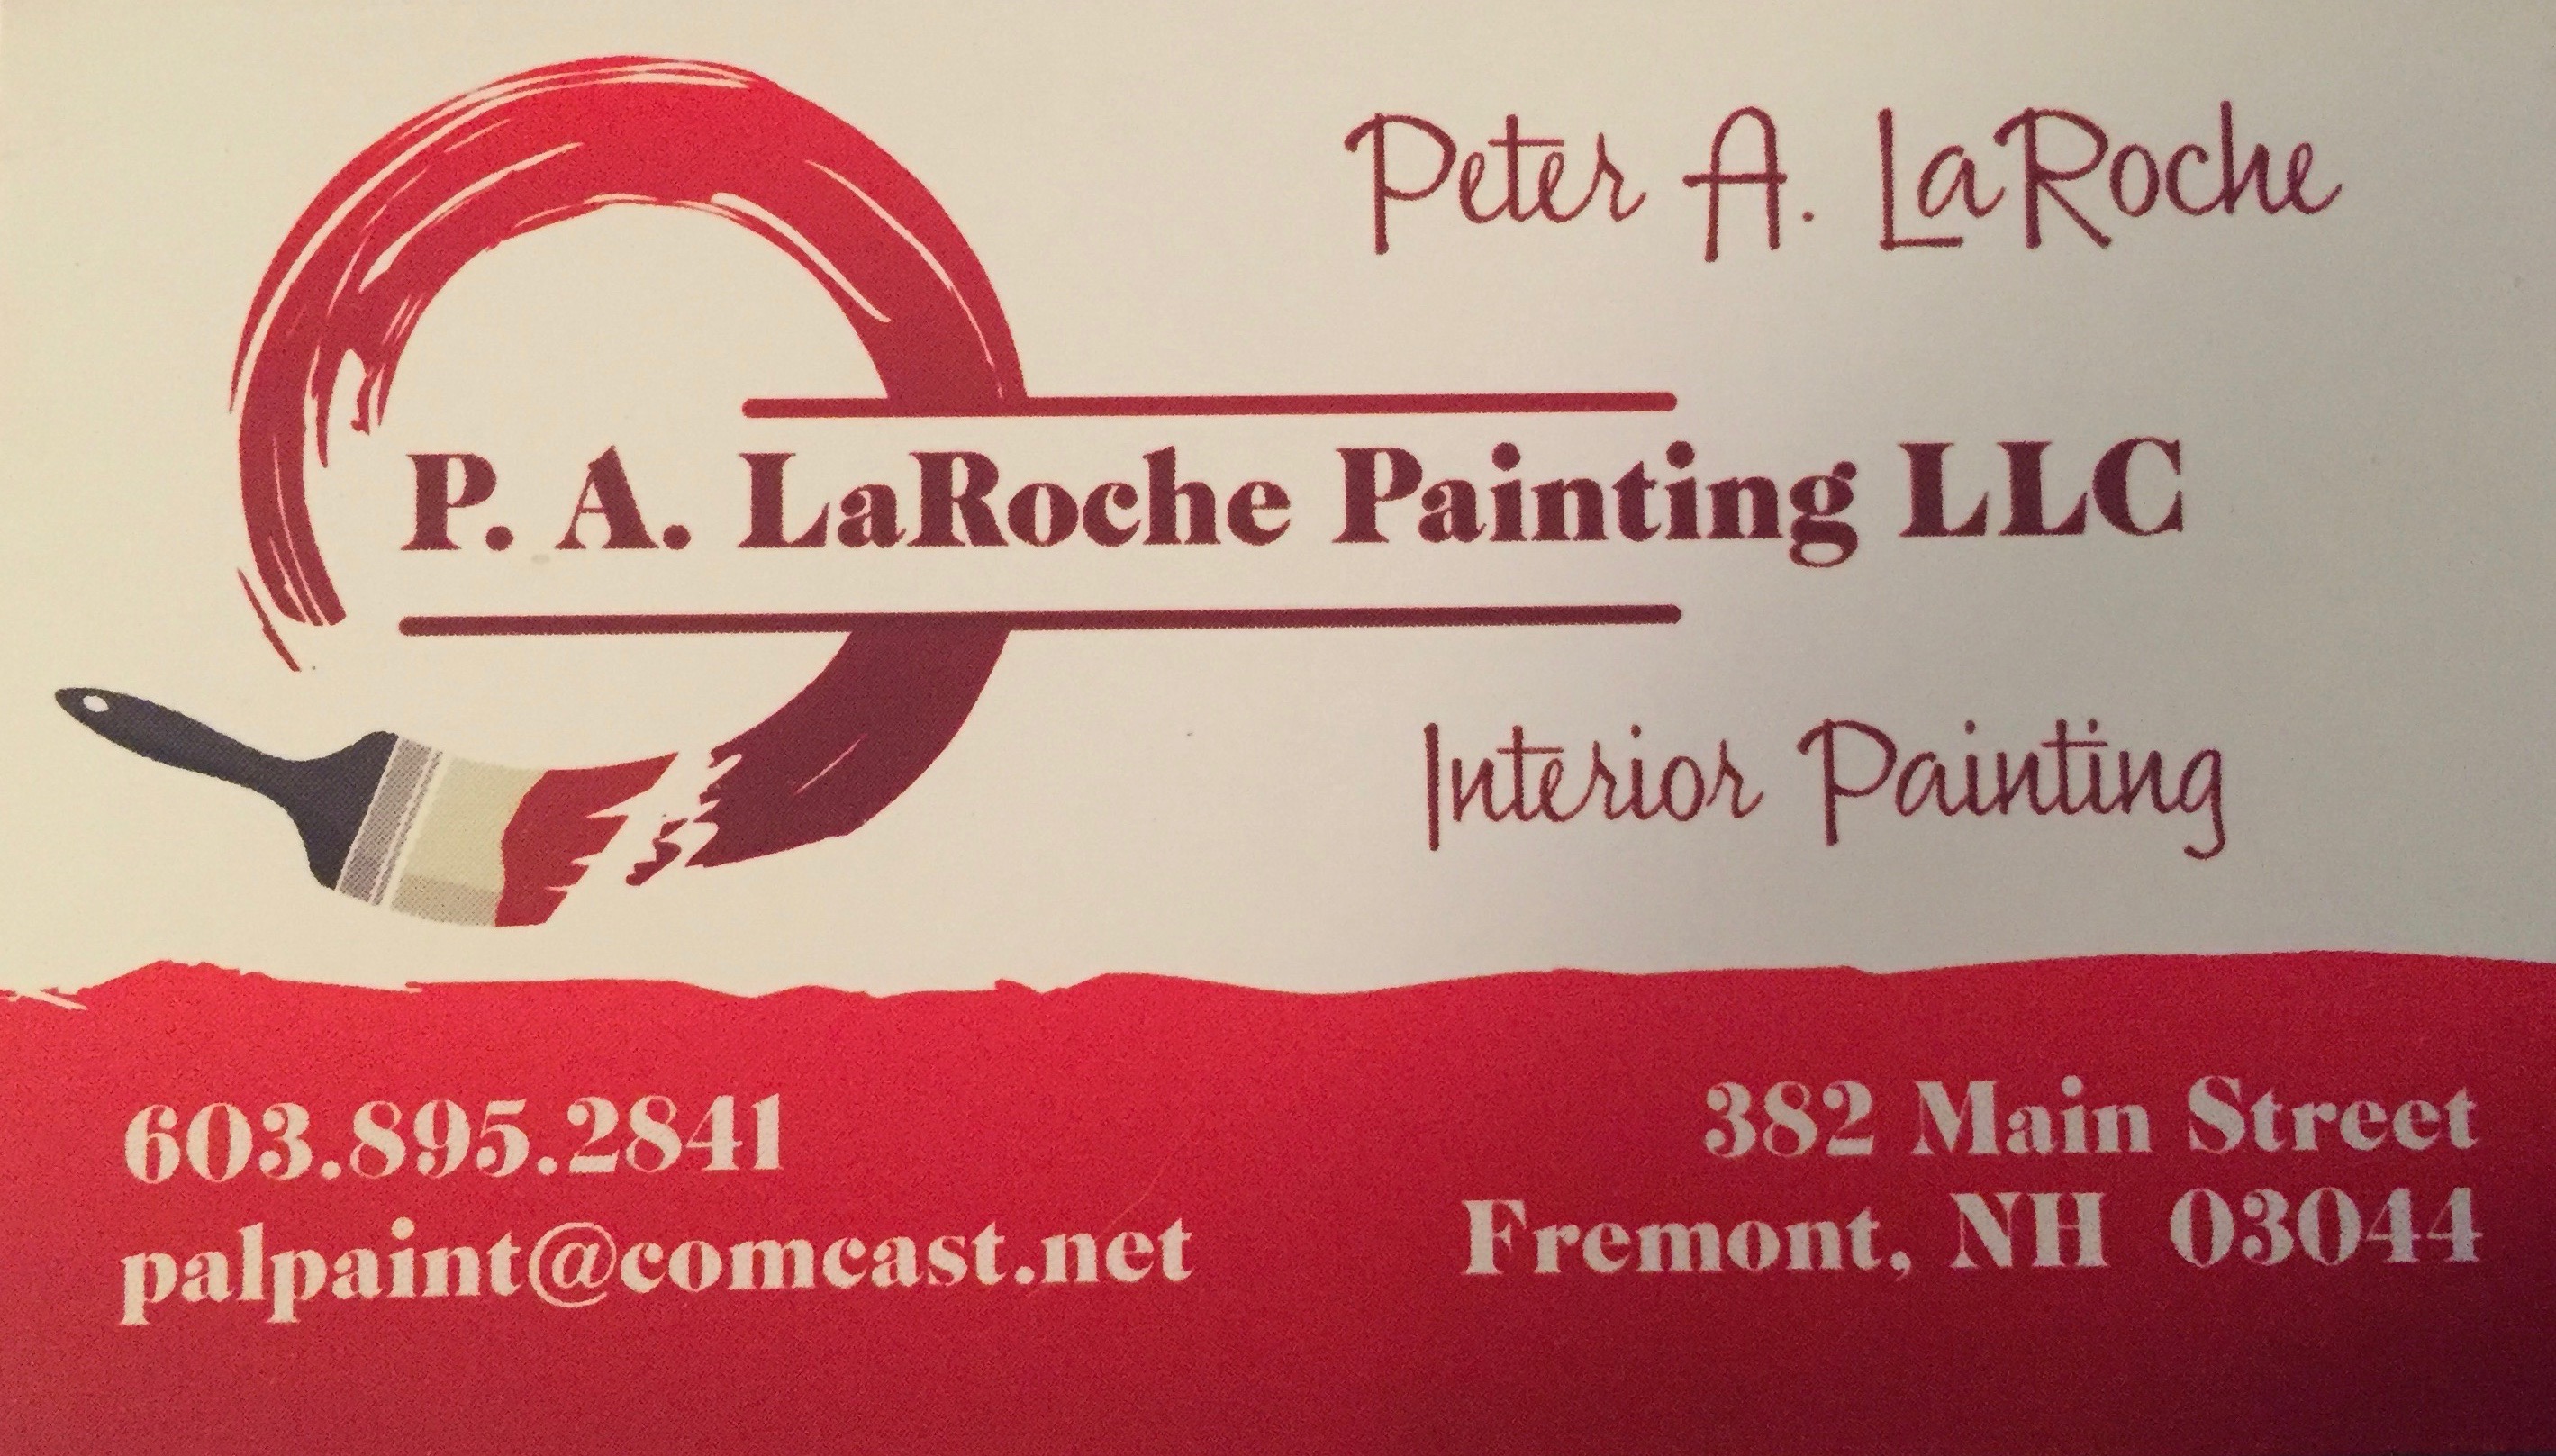 P.A. LaRoche Painting, LLC Logo